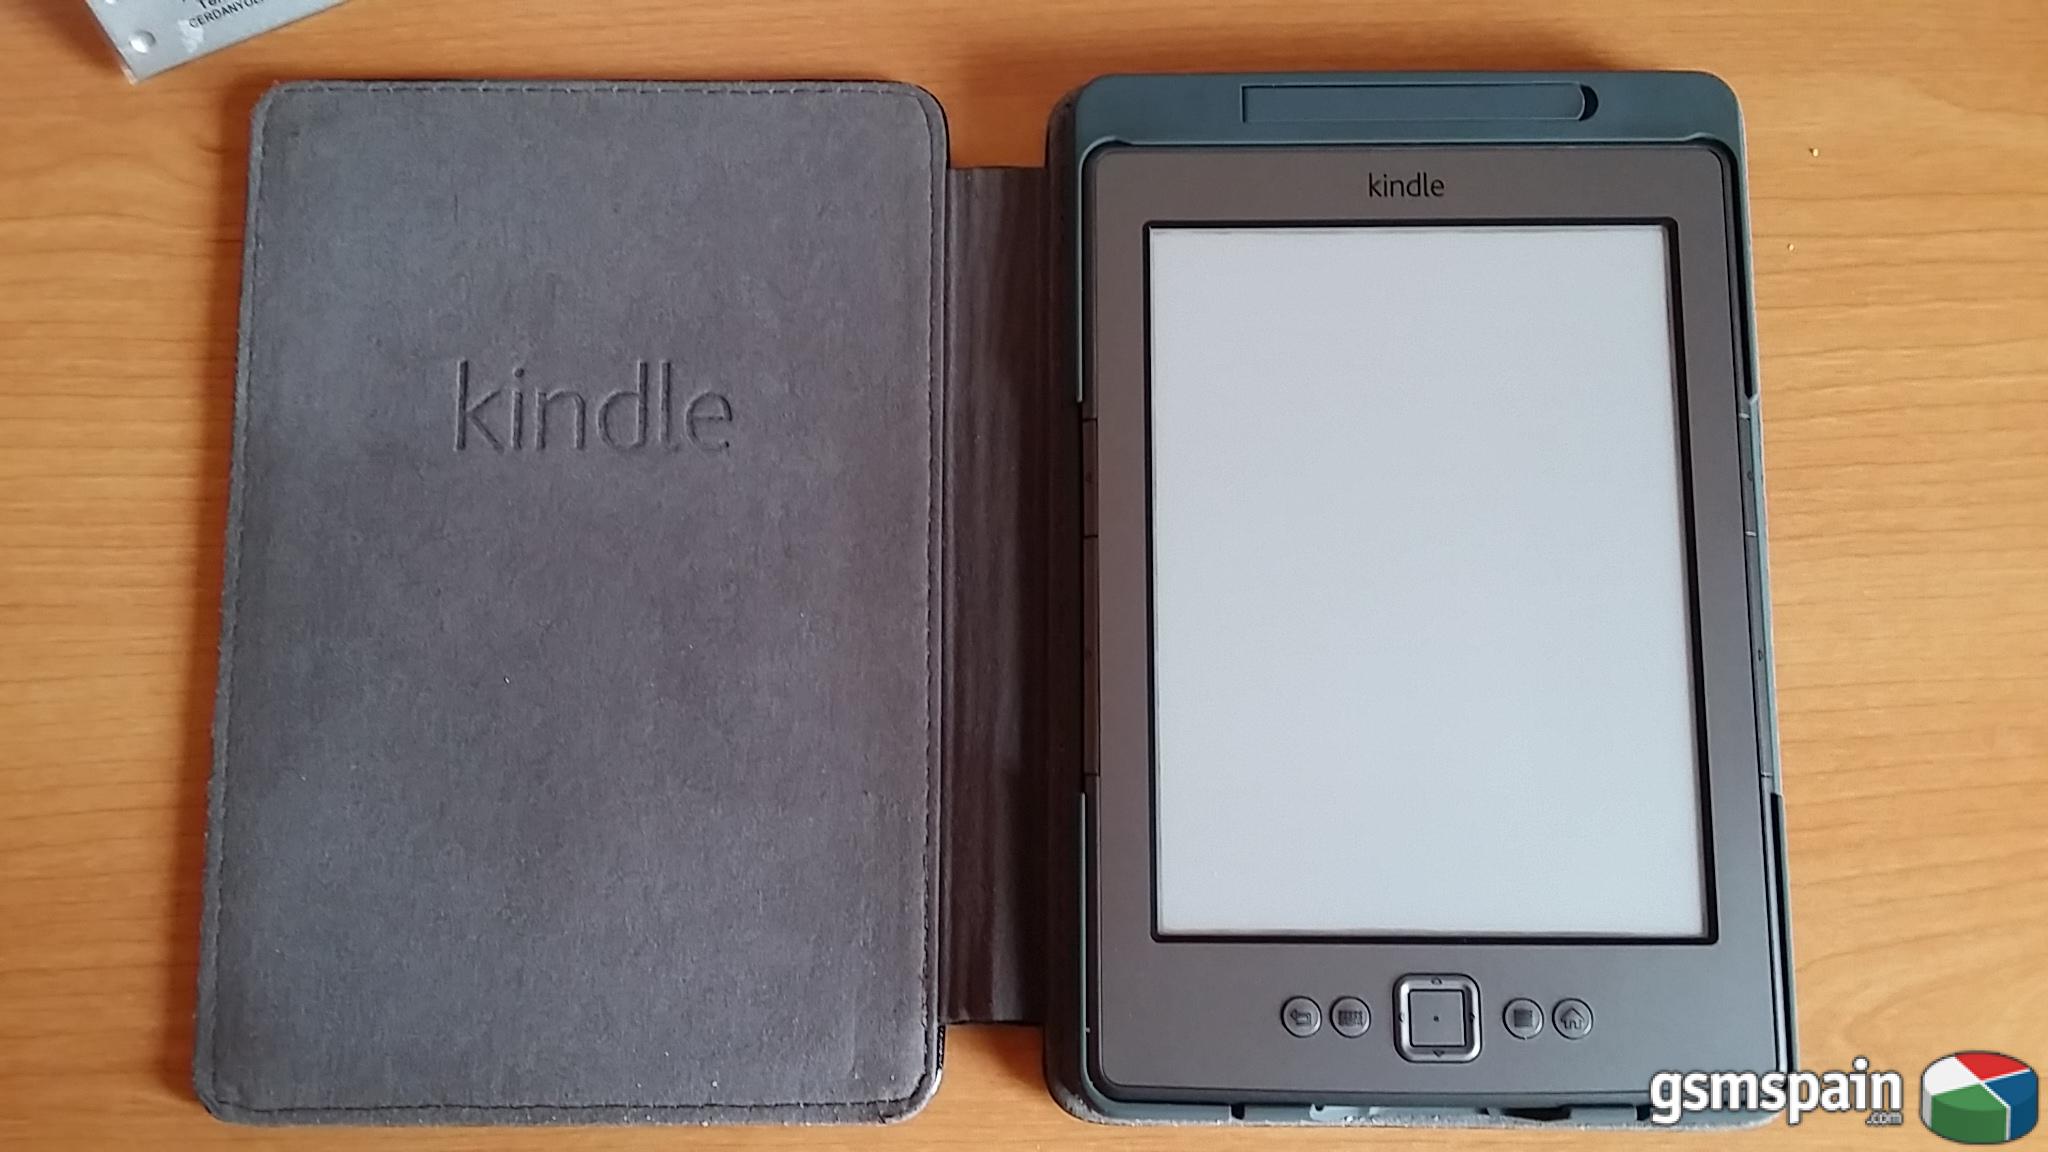 [VENDO] Kindle 3 + funda con luz:50 euros g.i.